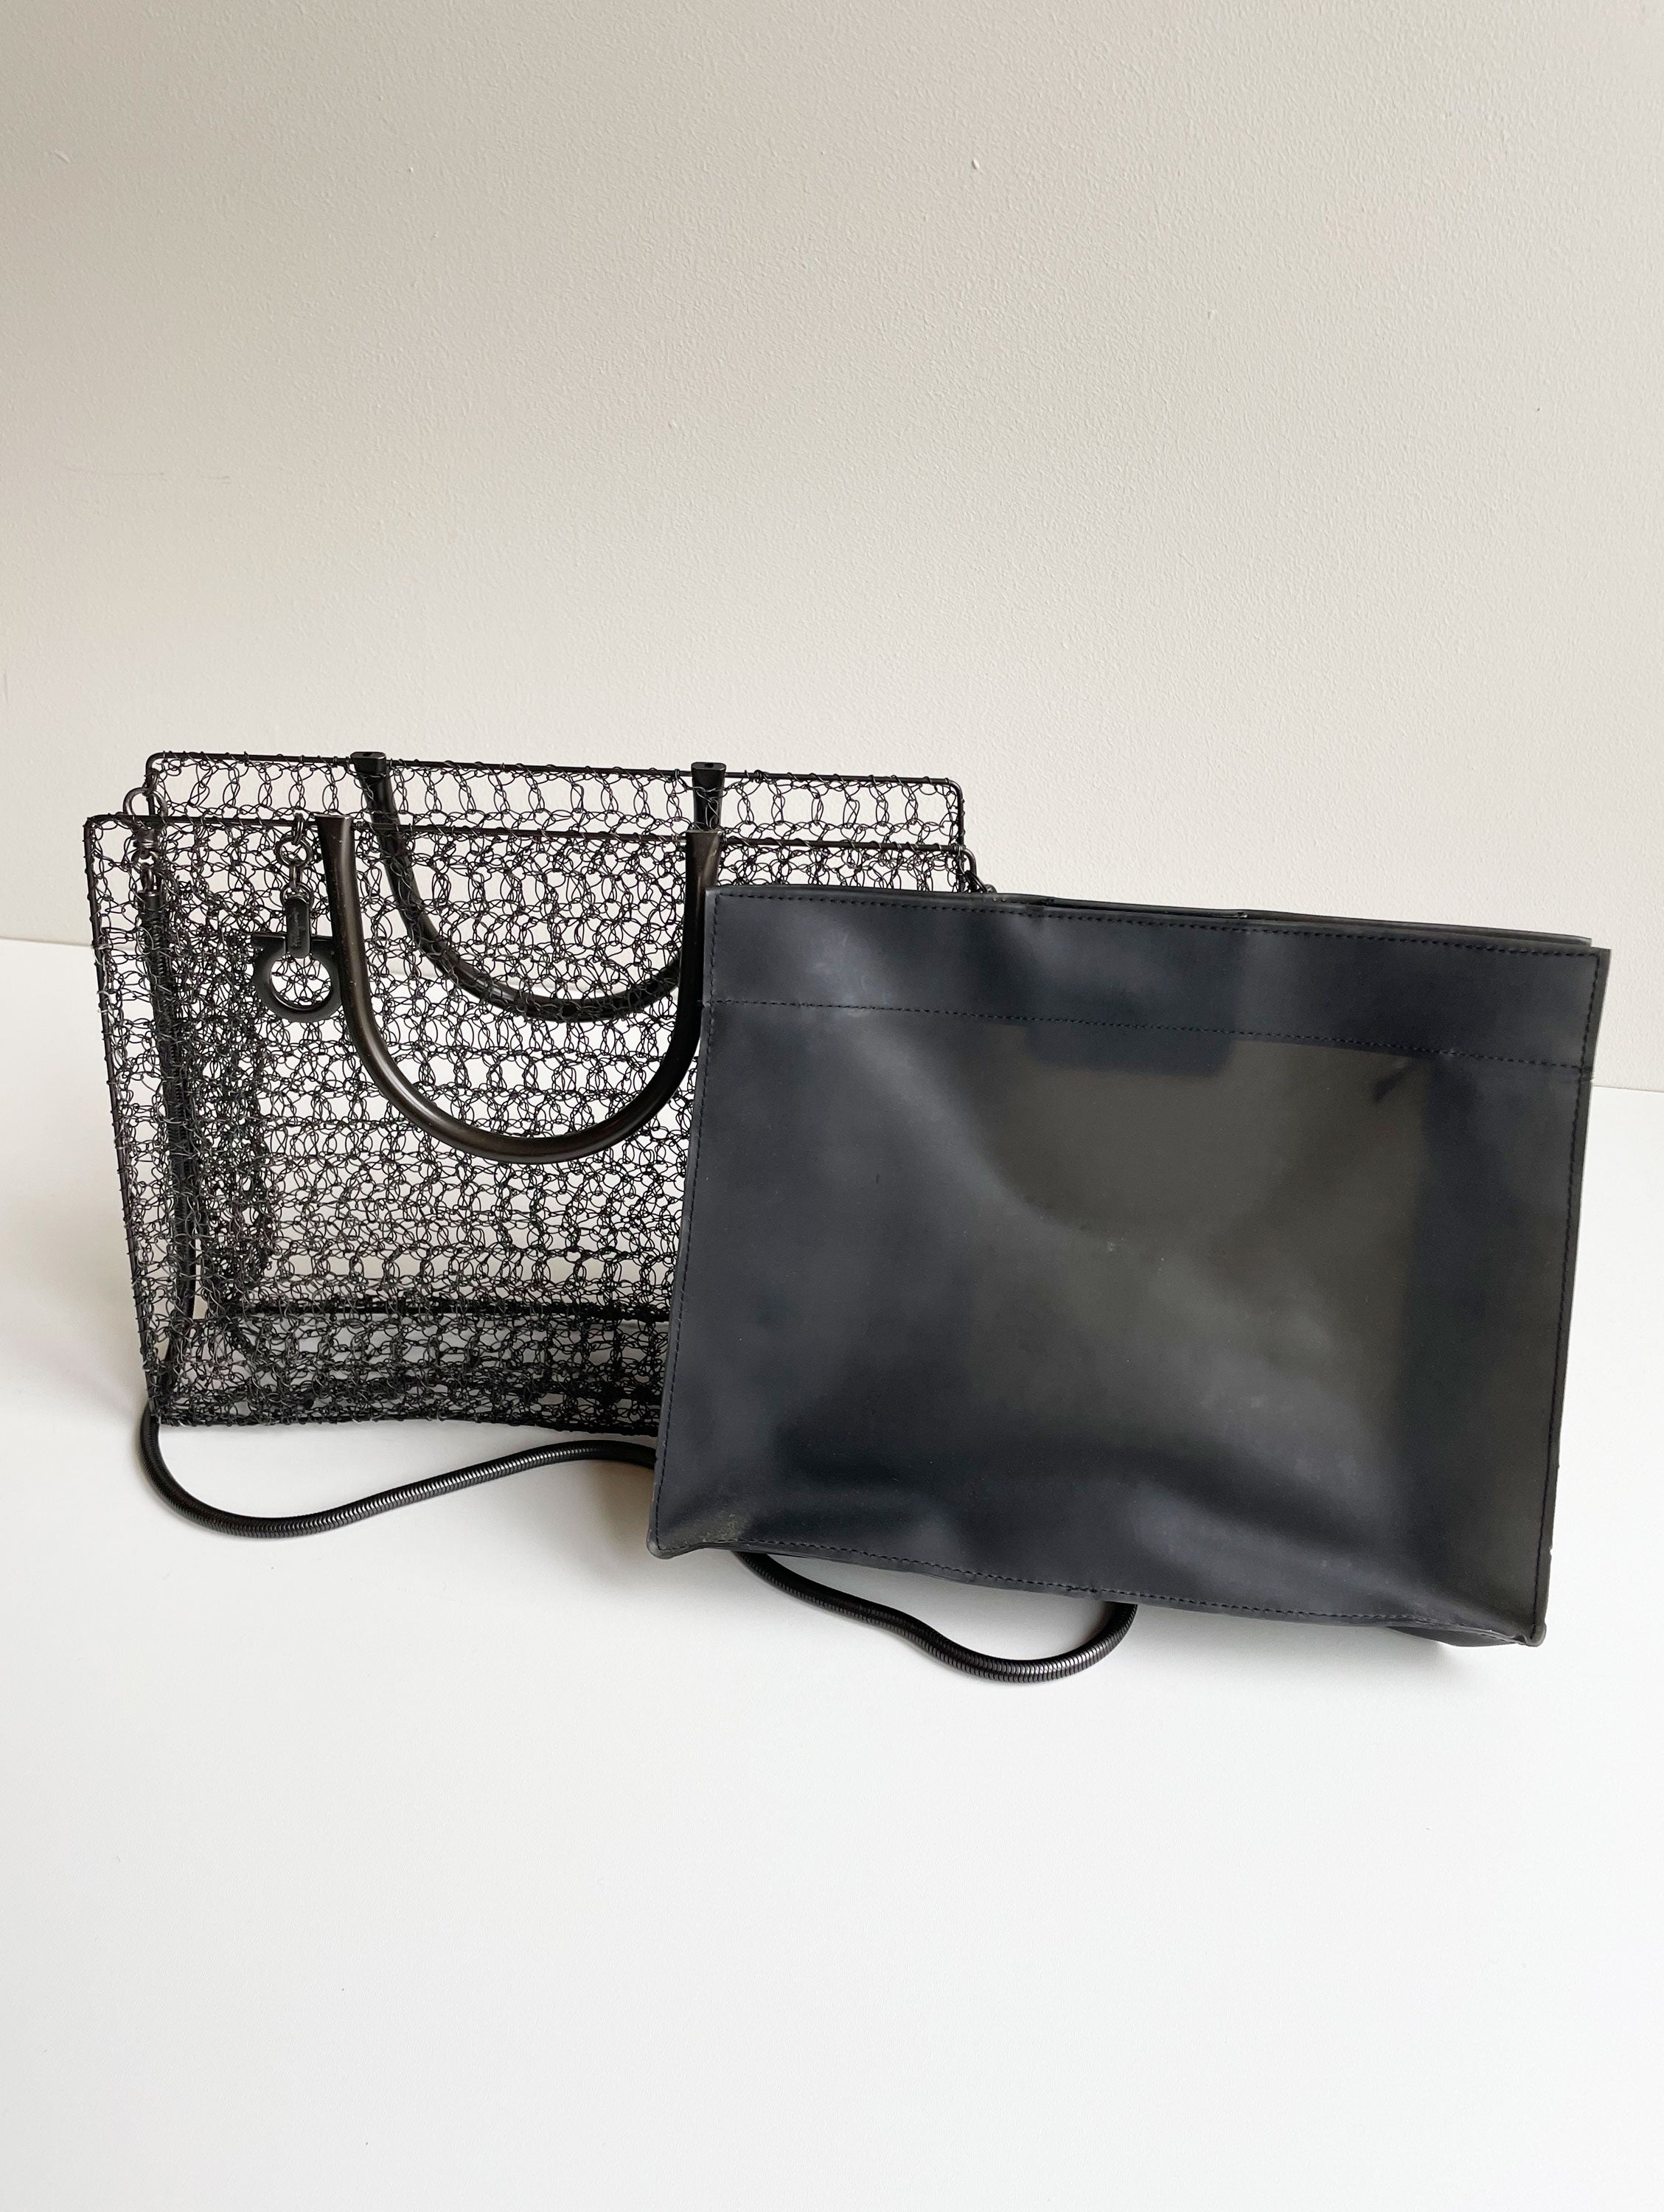 Vintage 1990’s wired handbag